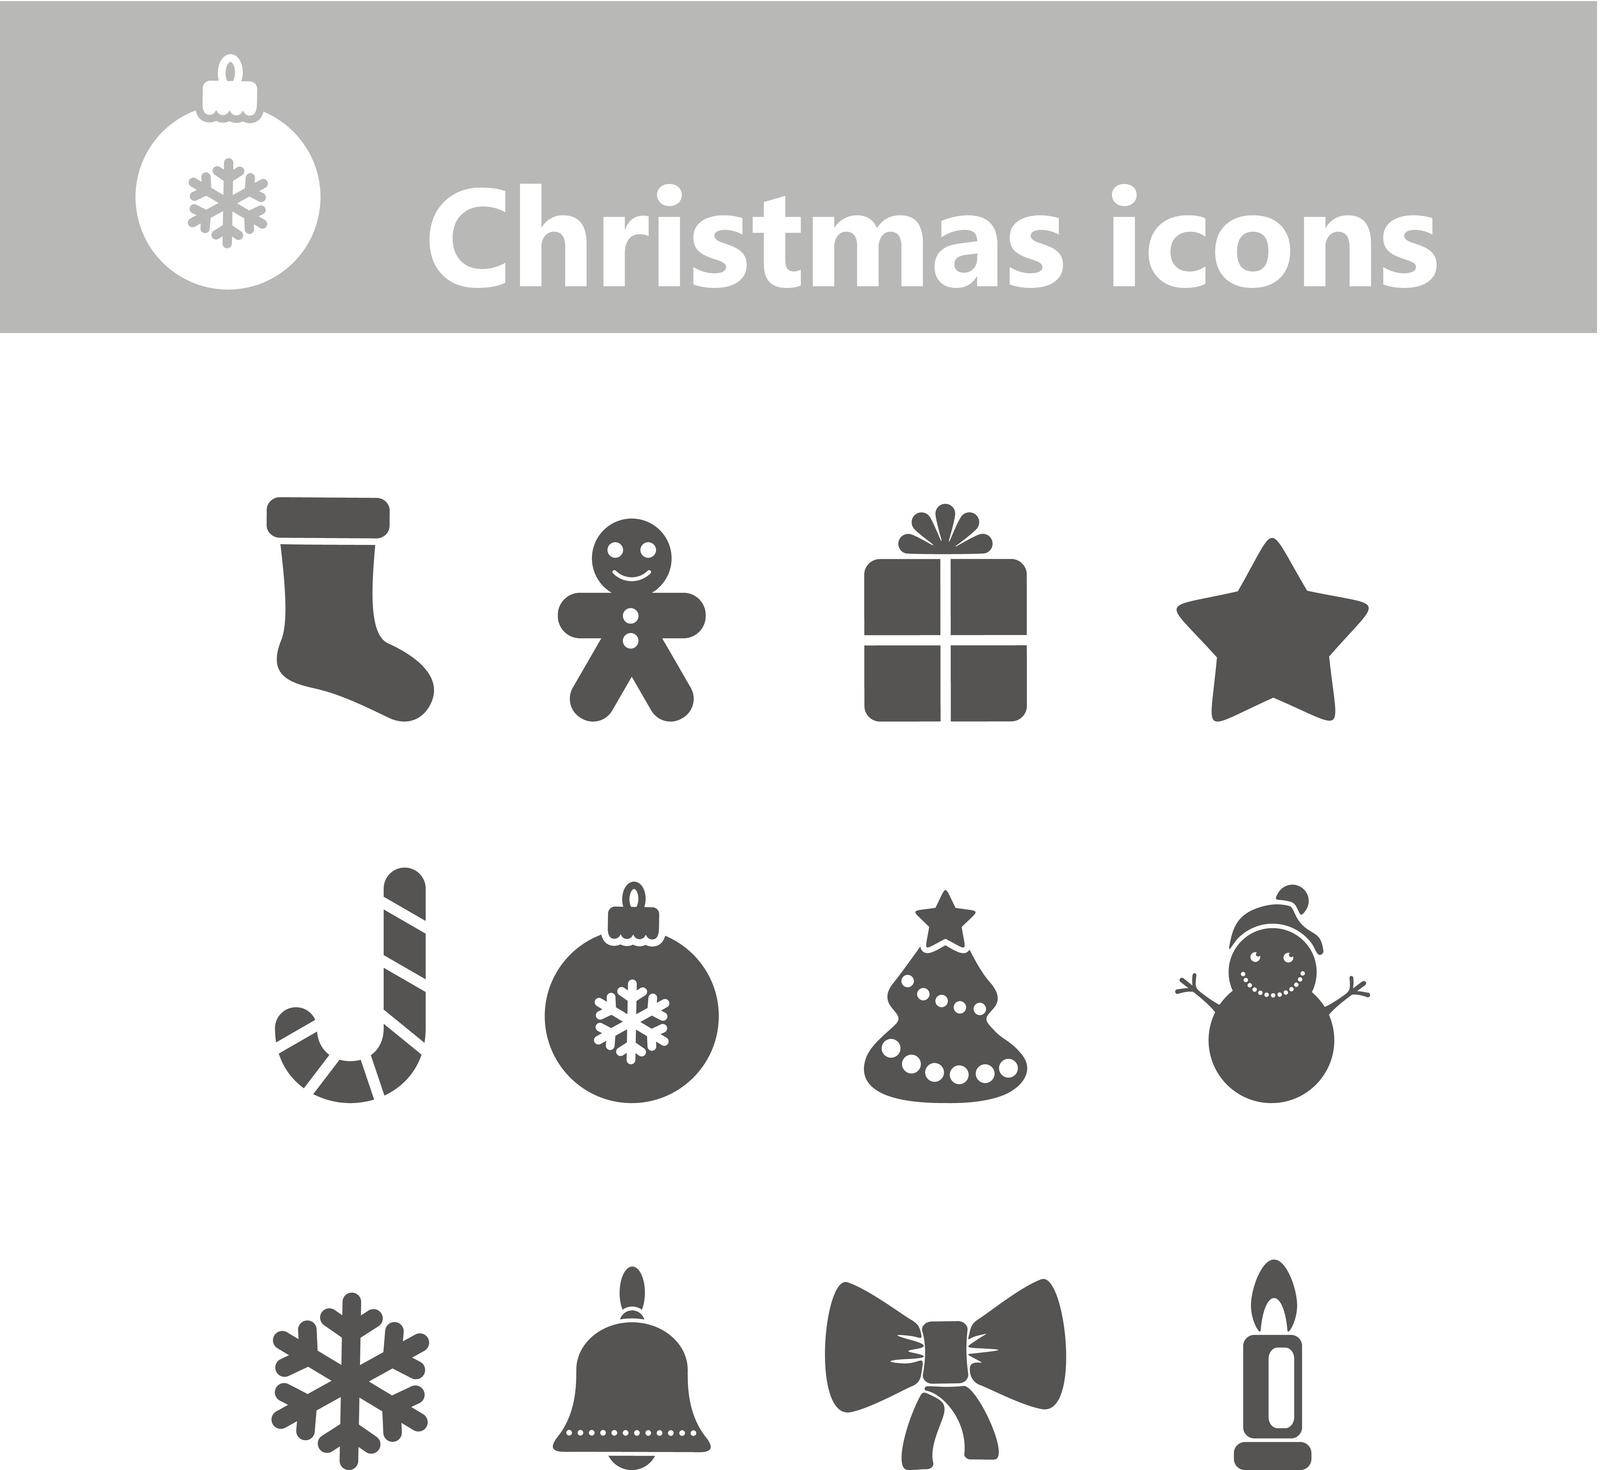 The modern Christmas icons vector eps 10